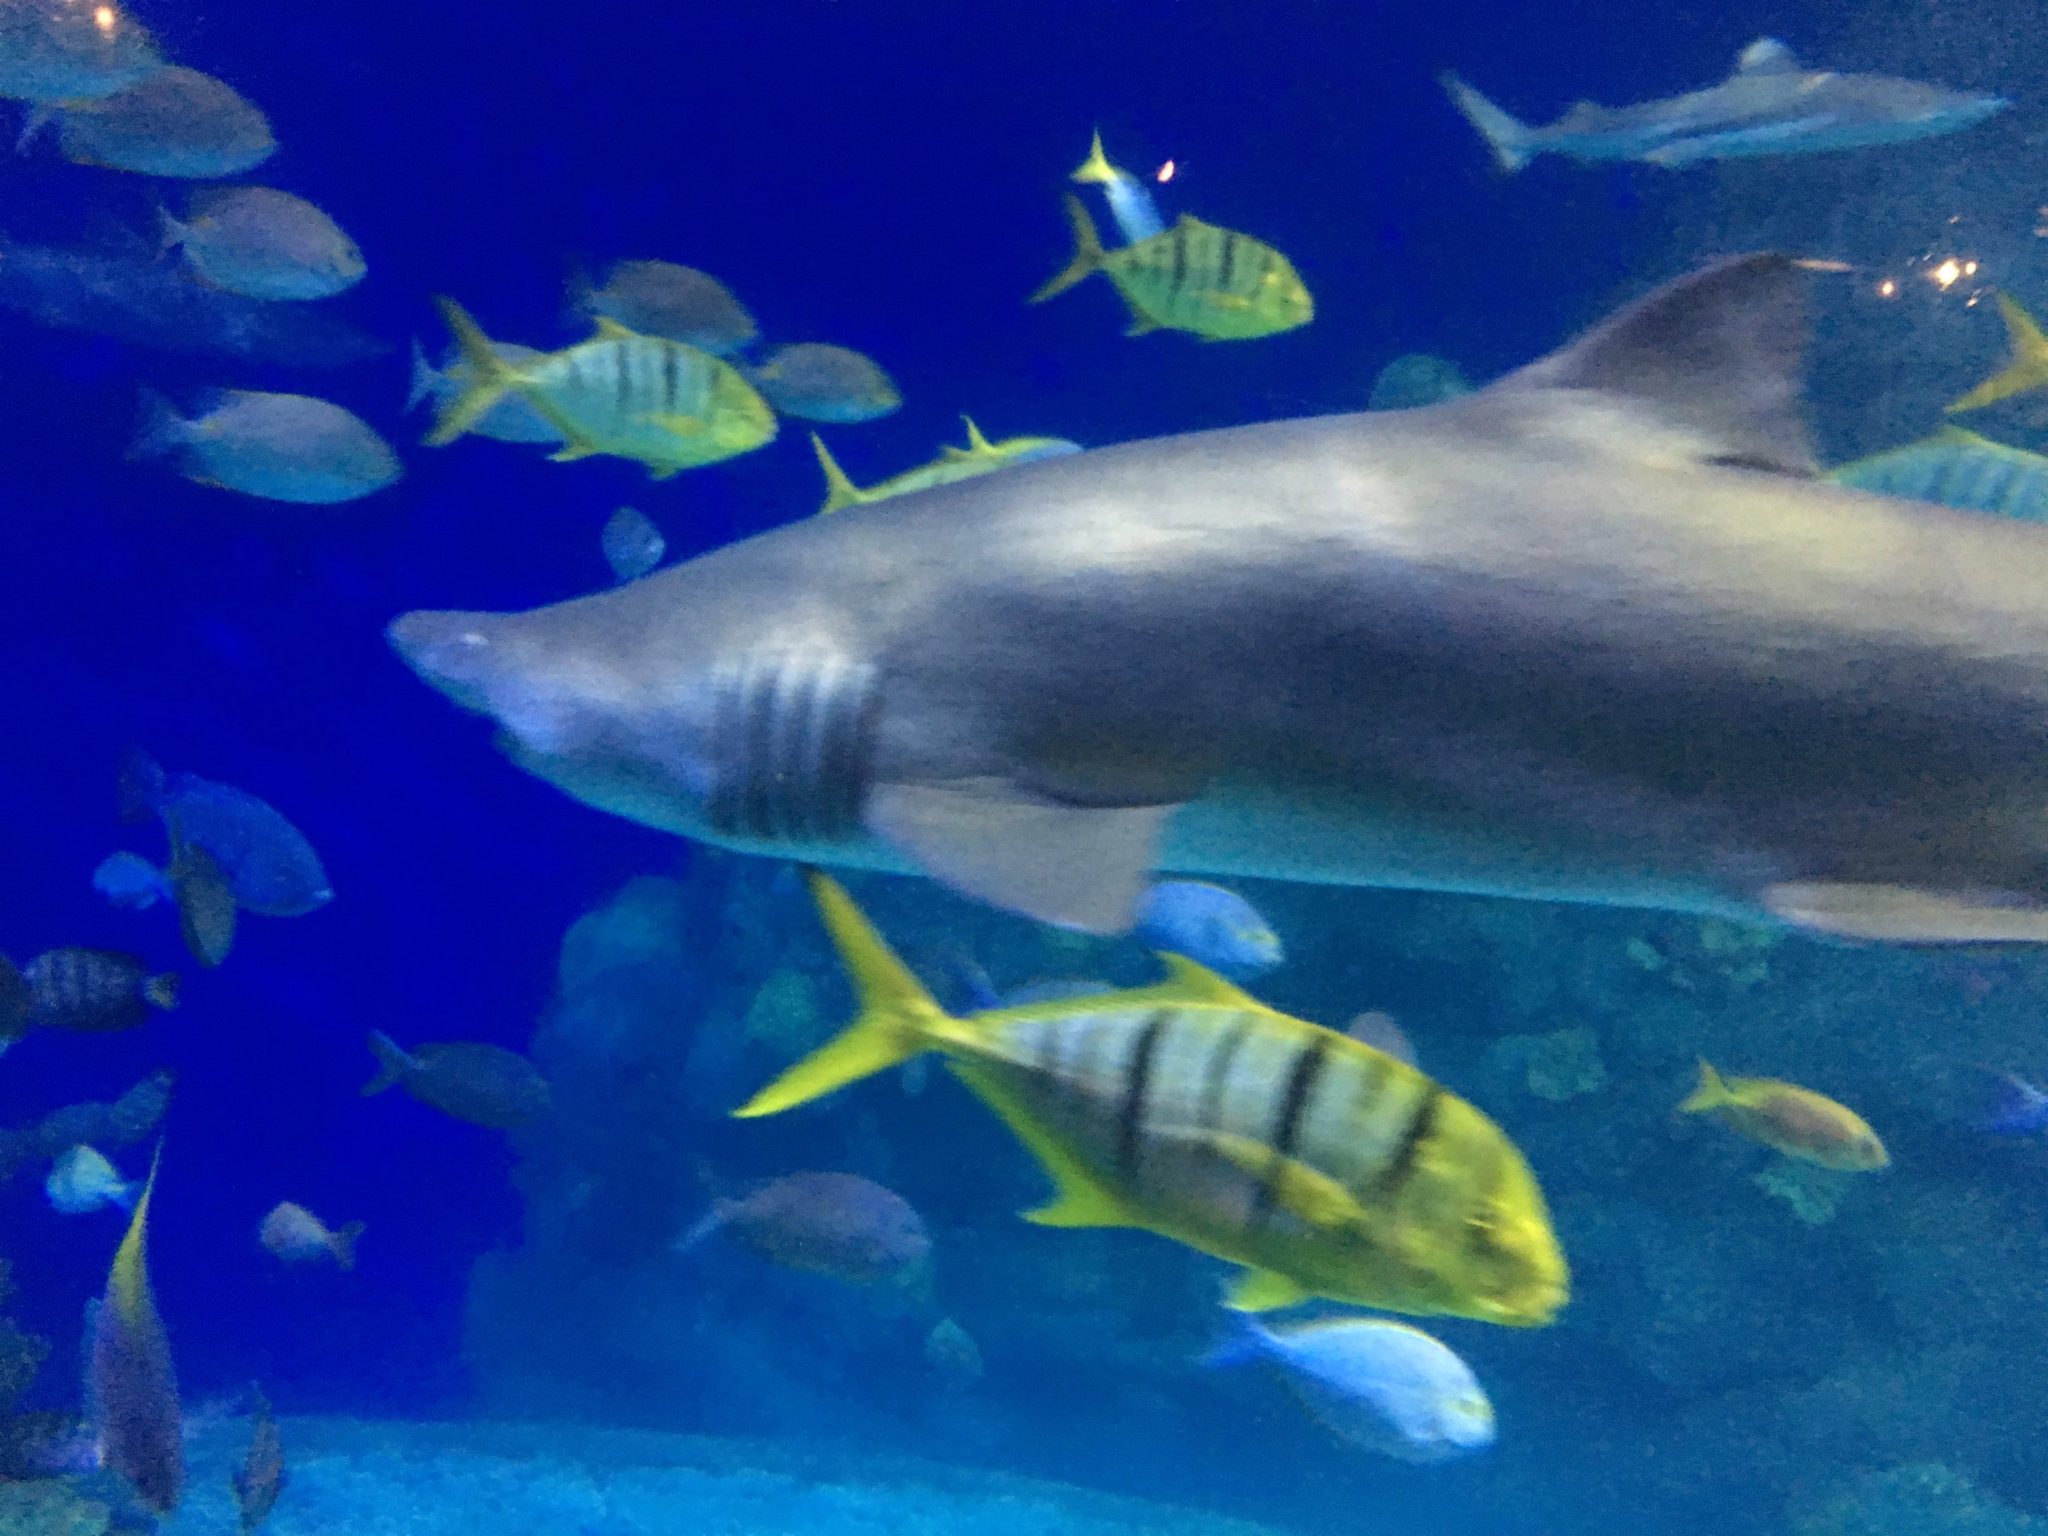 Aquarium shark tank, Denver